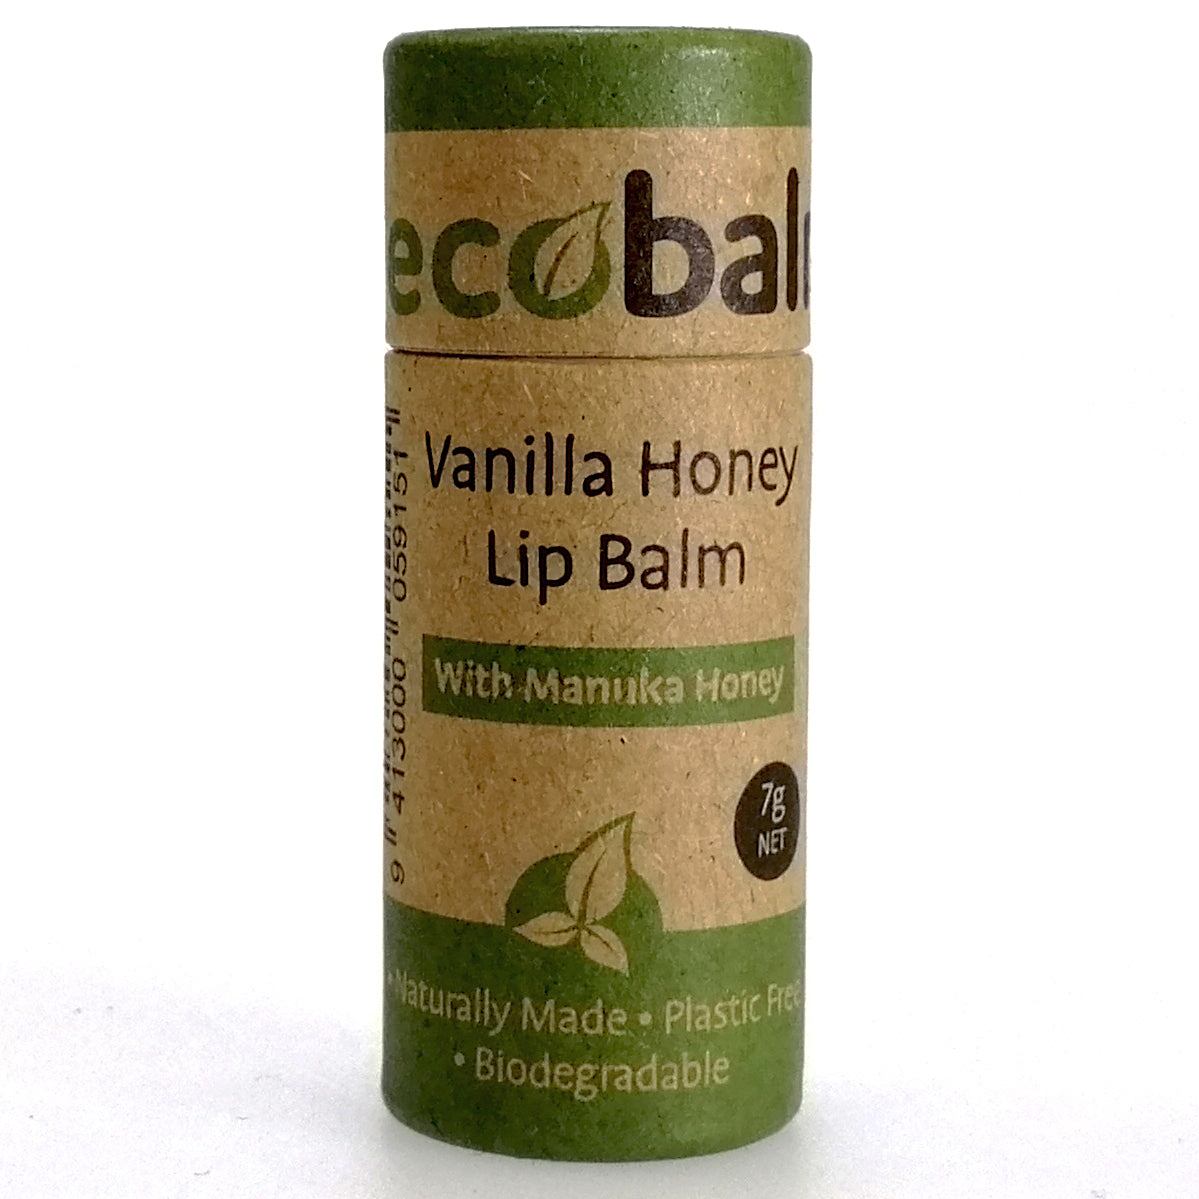 Ecobalm - Vanilla Honey Lip Balm